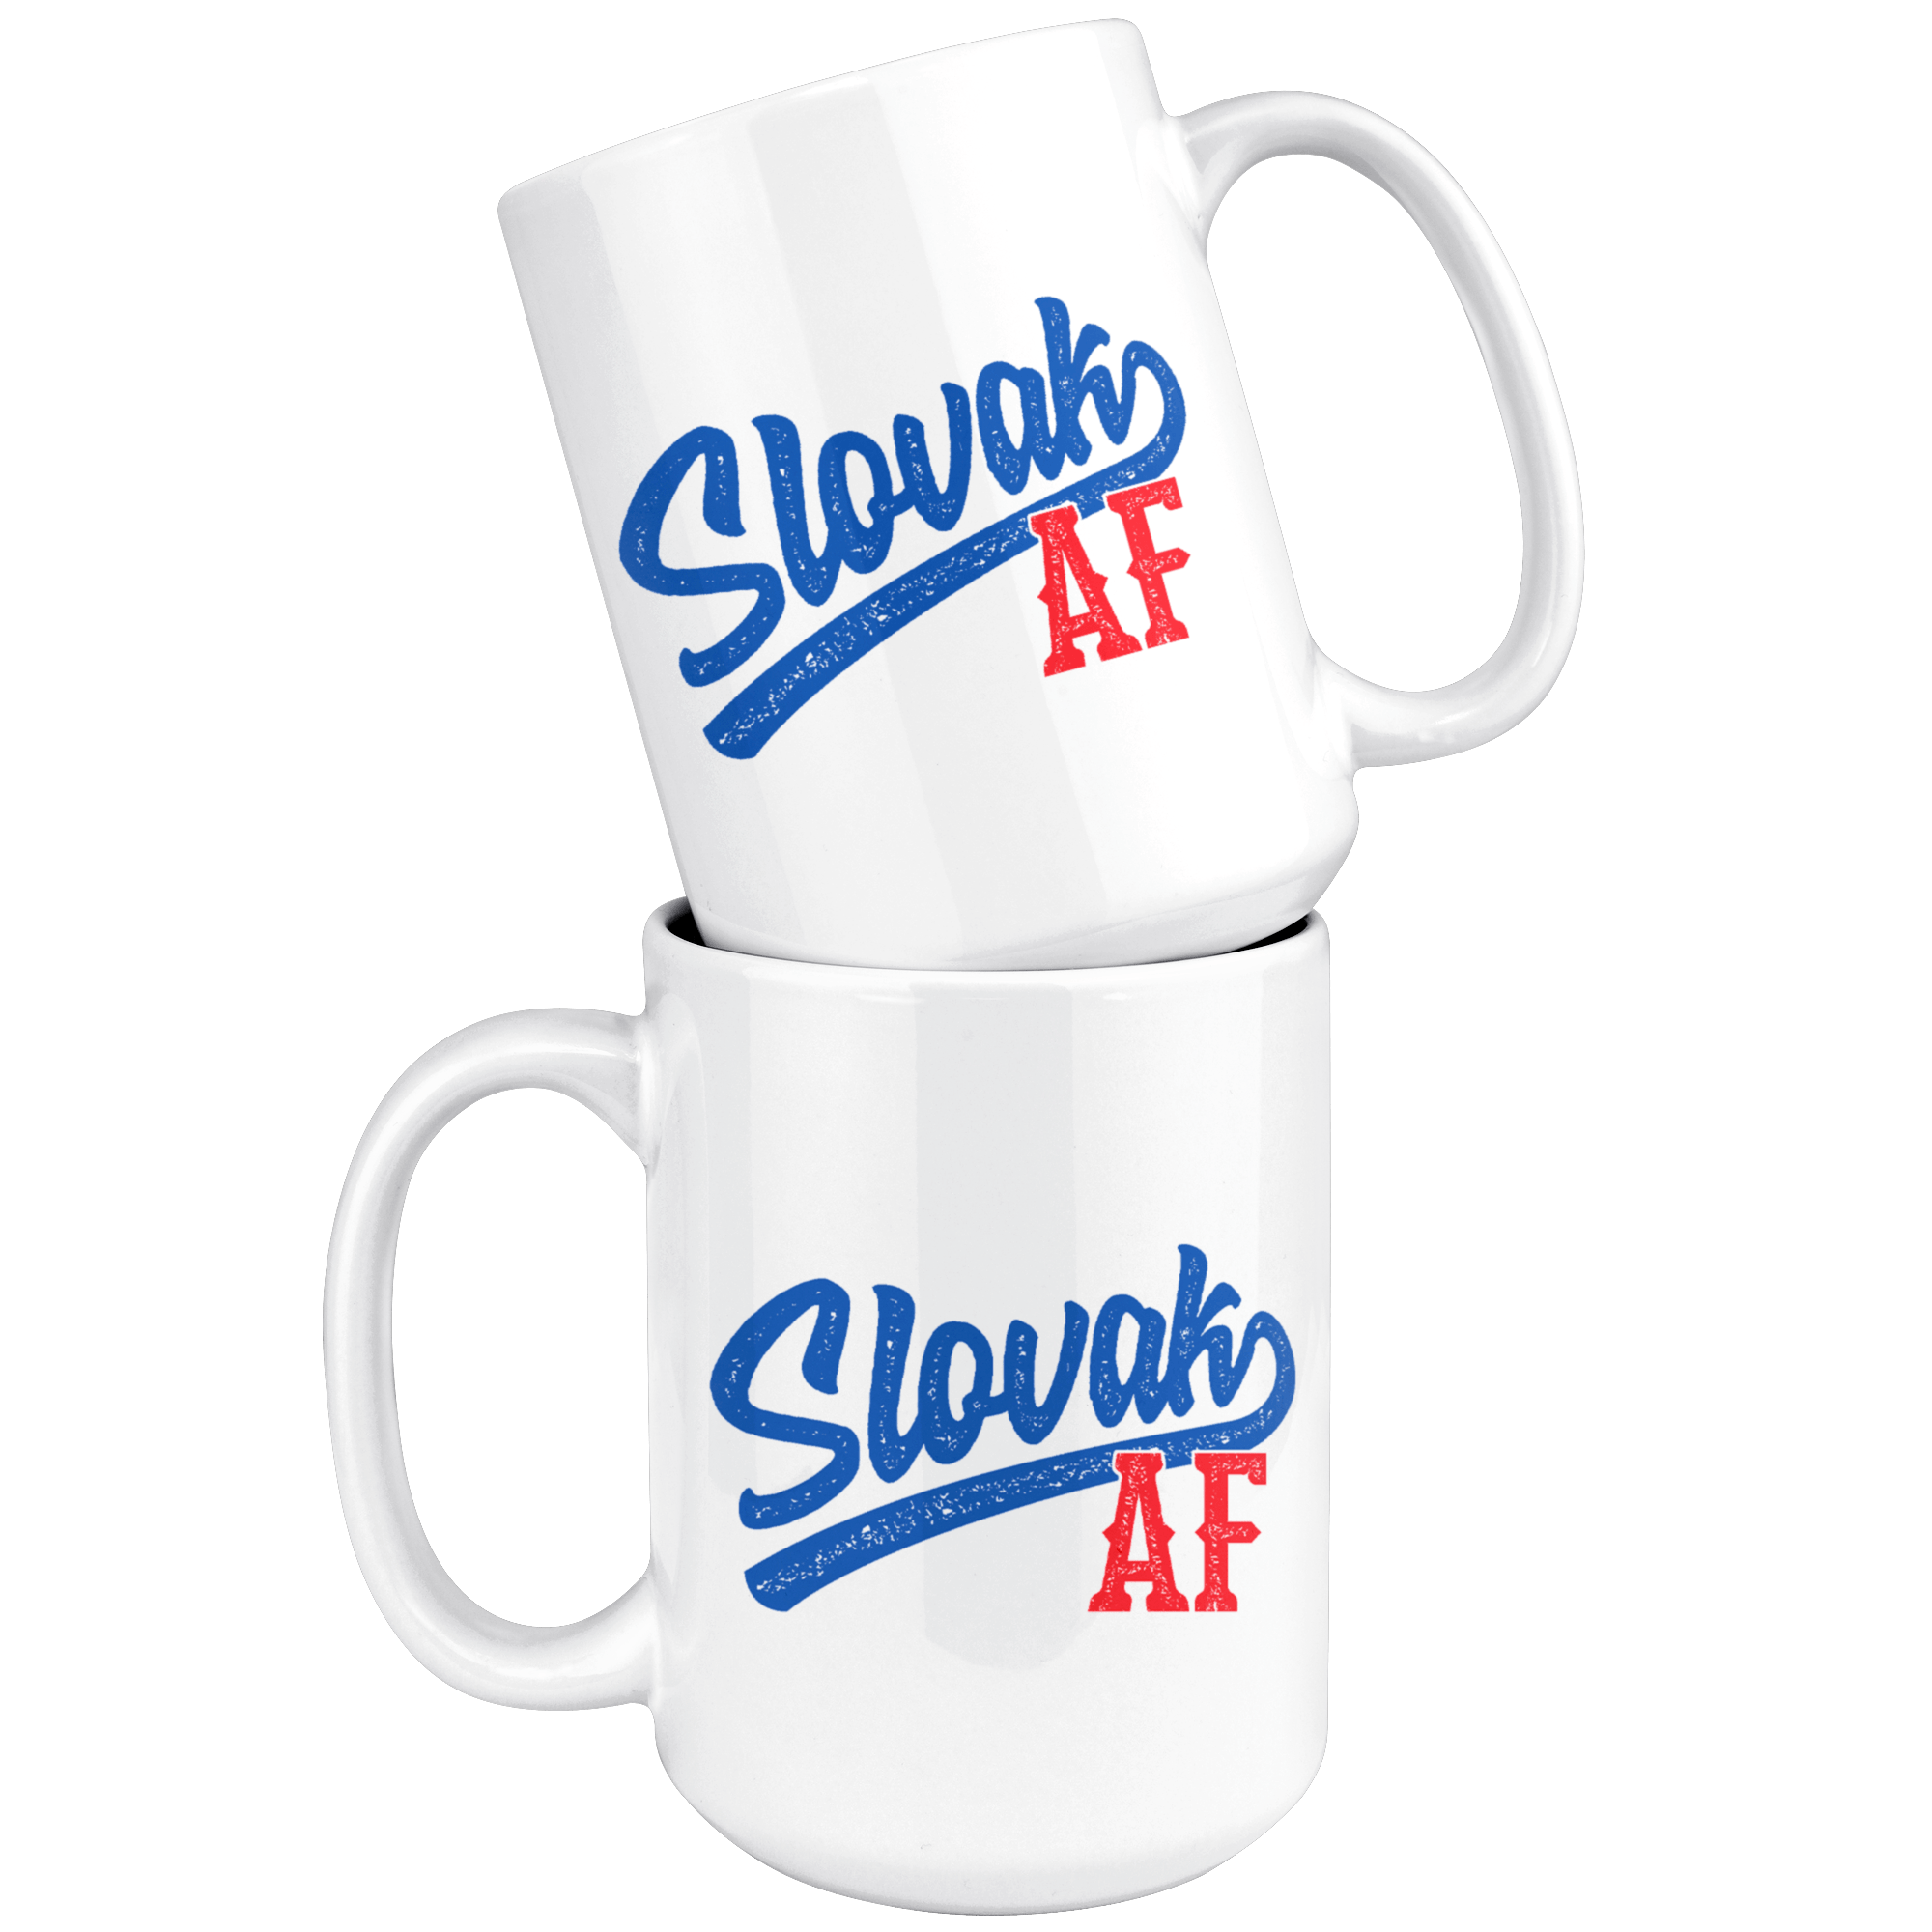 Slovak AF Coffee Mug Drinkware teelaunch   